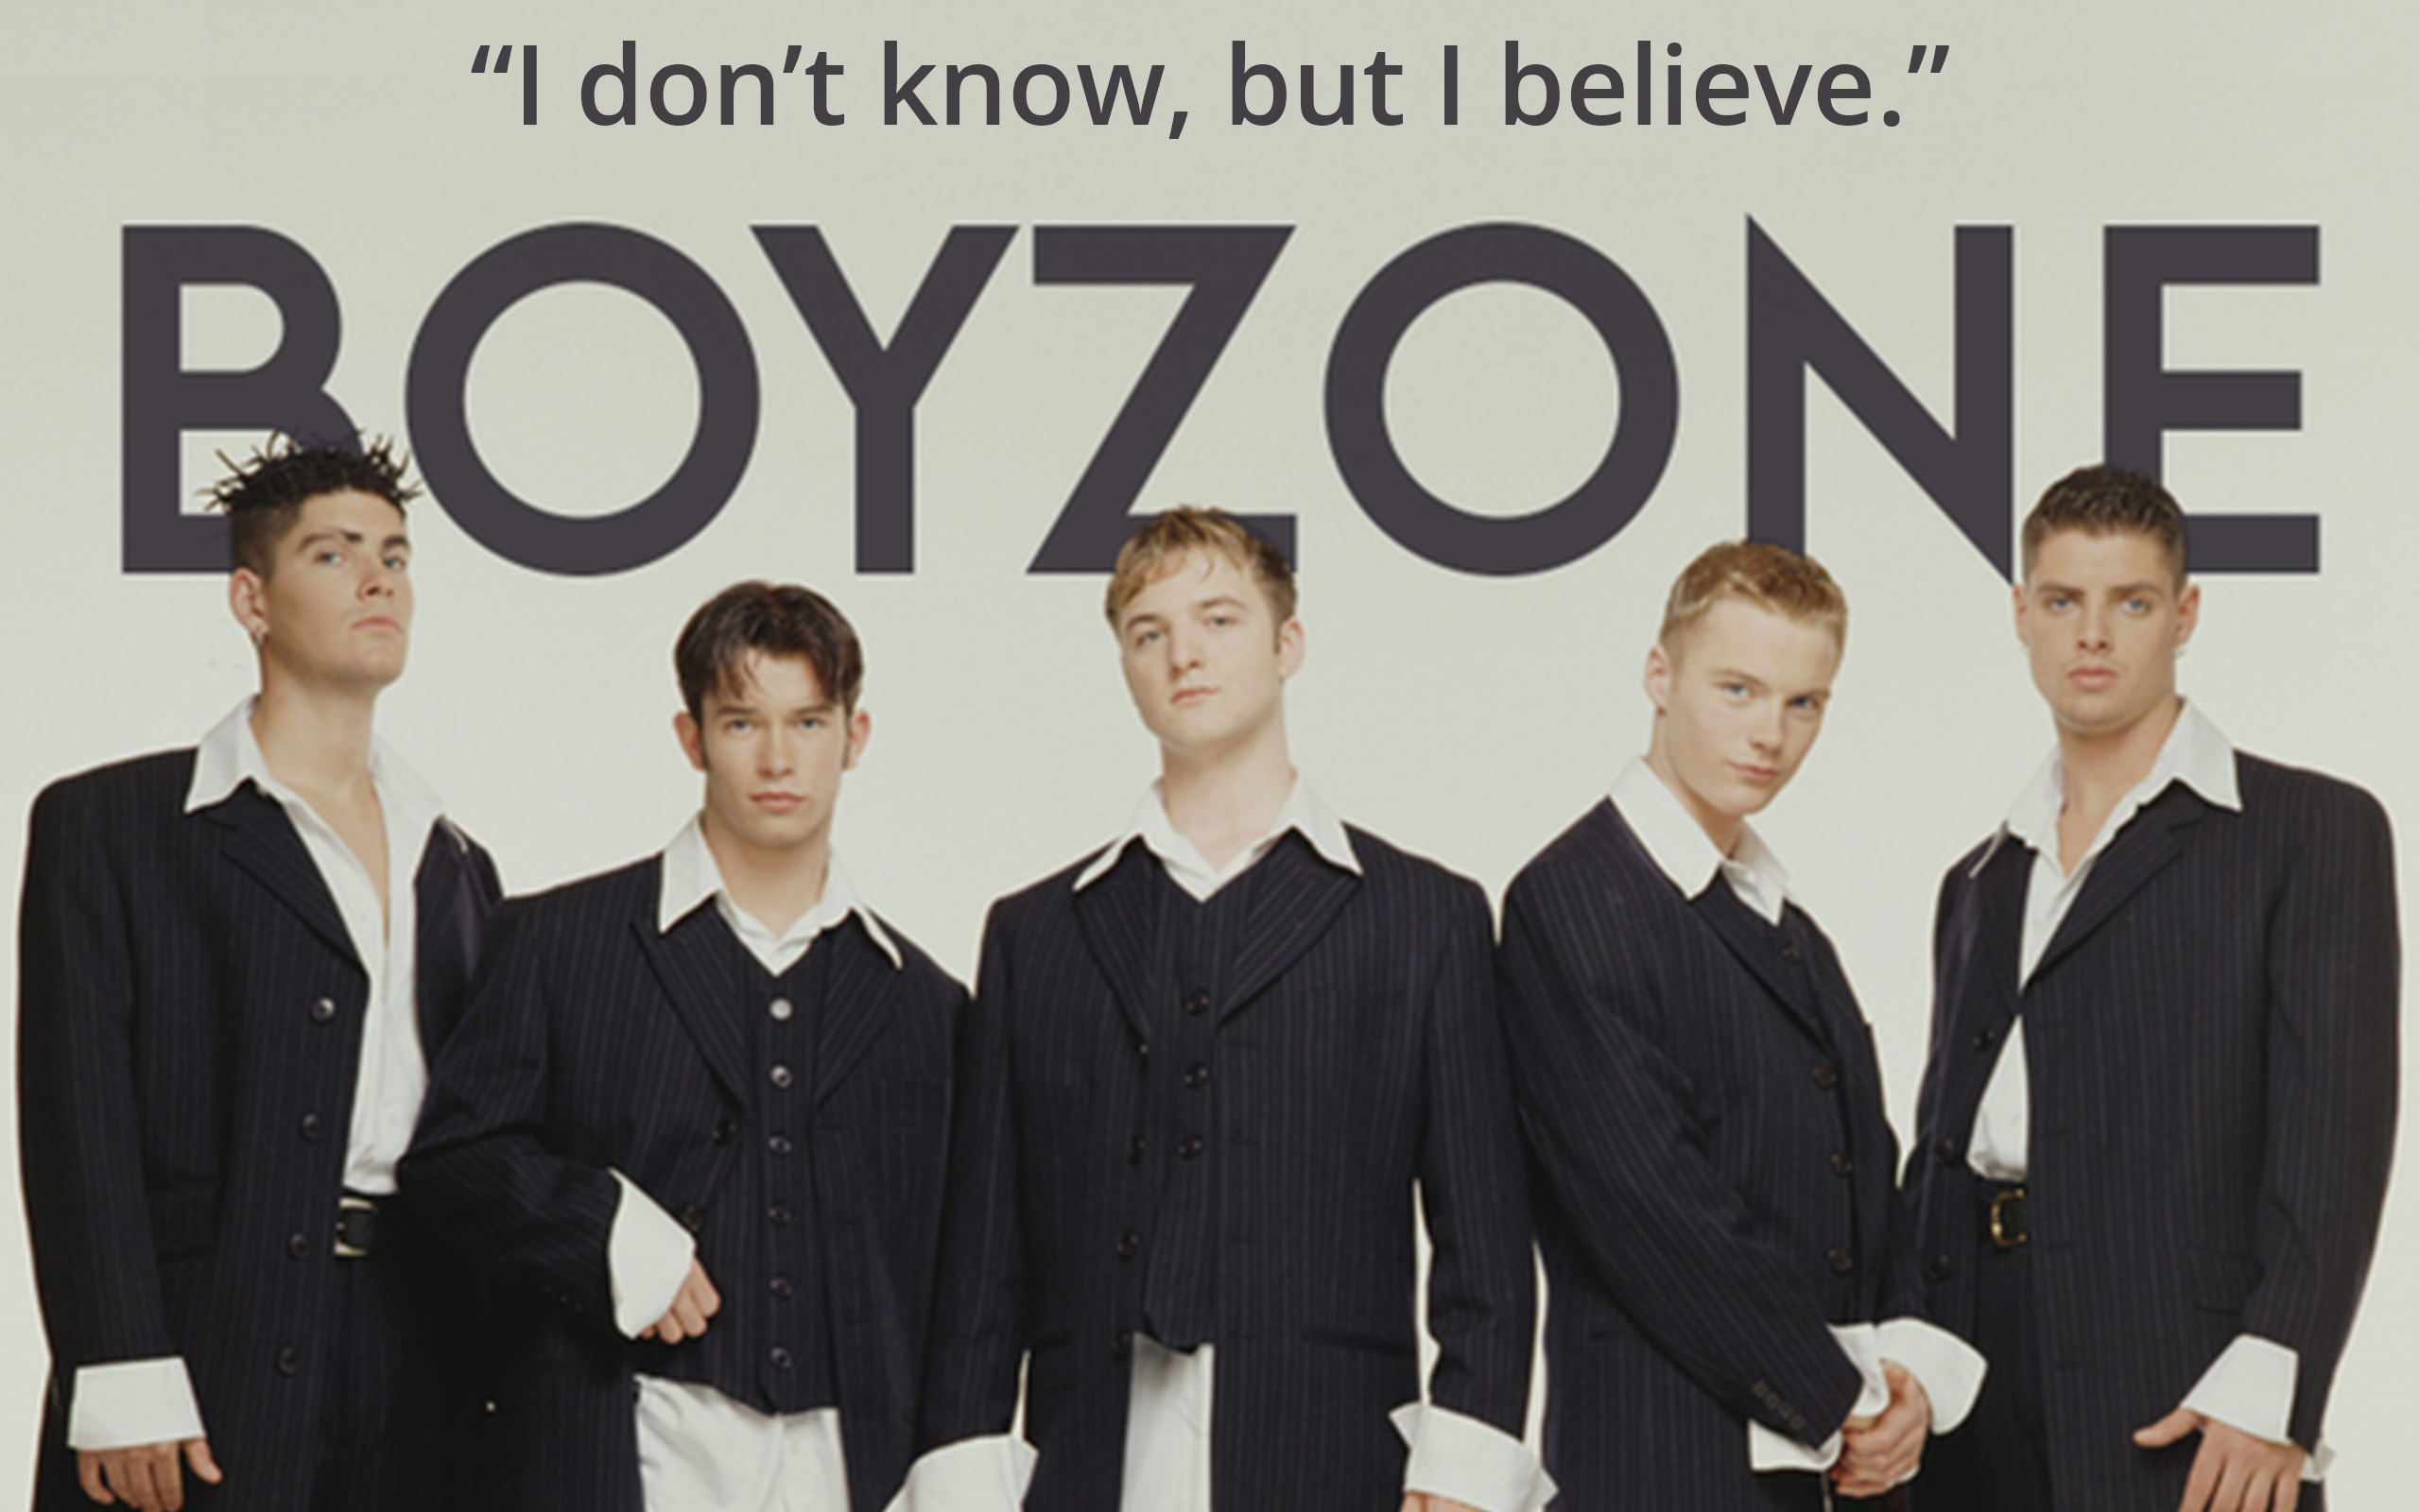 Boyzone-i-believe.jpg